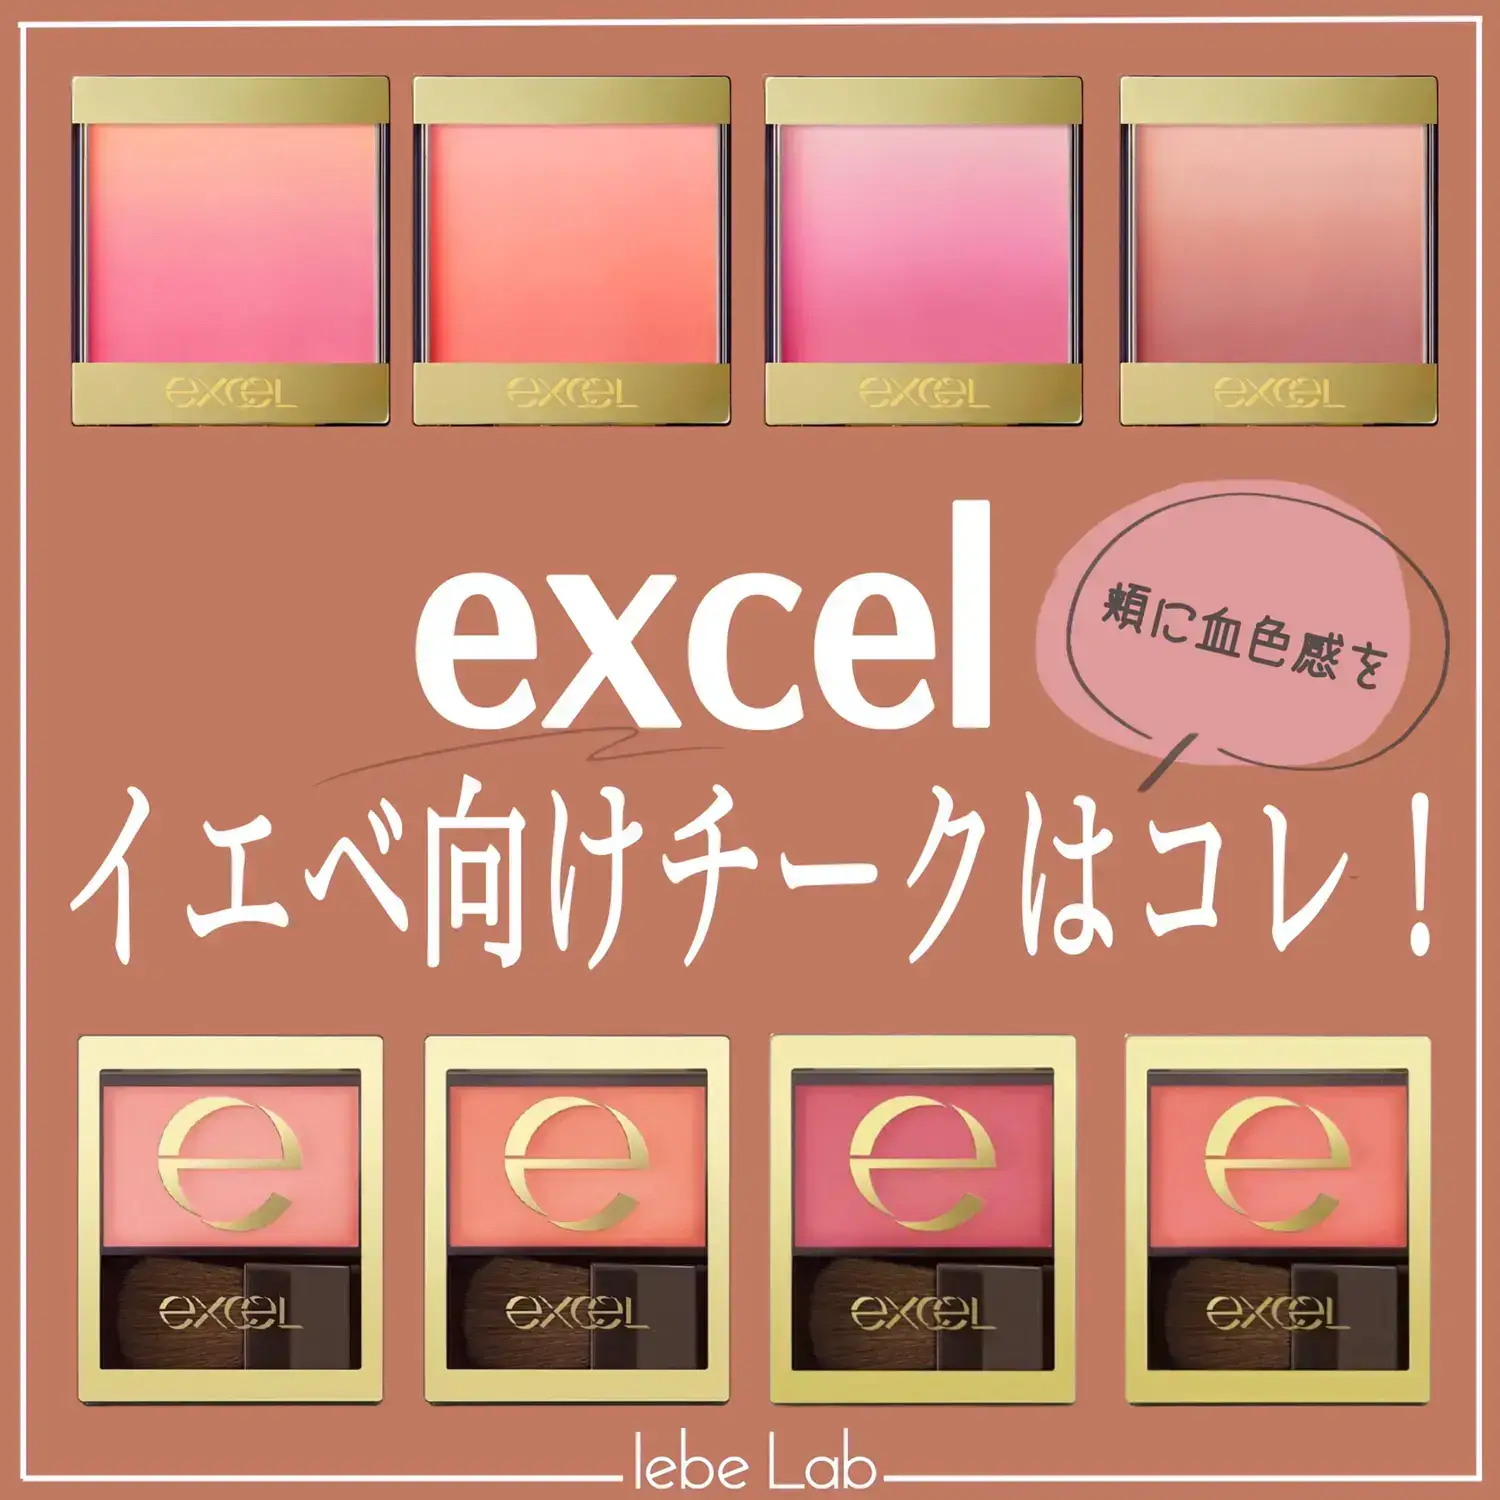 Excelチーク - 通販 - dekro.co.za